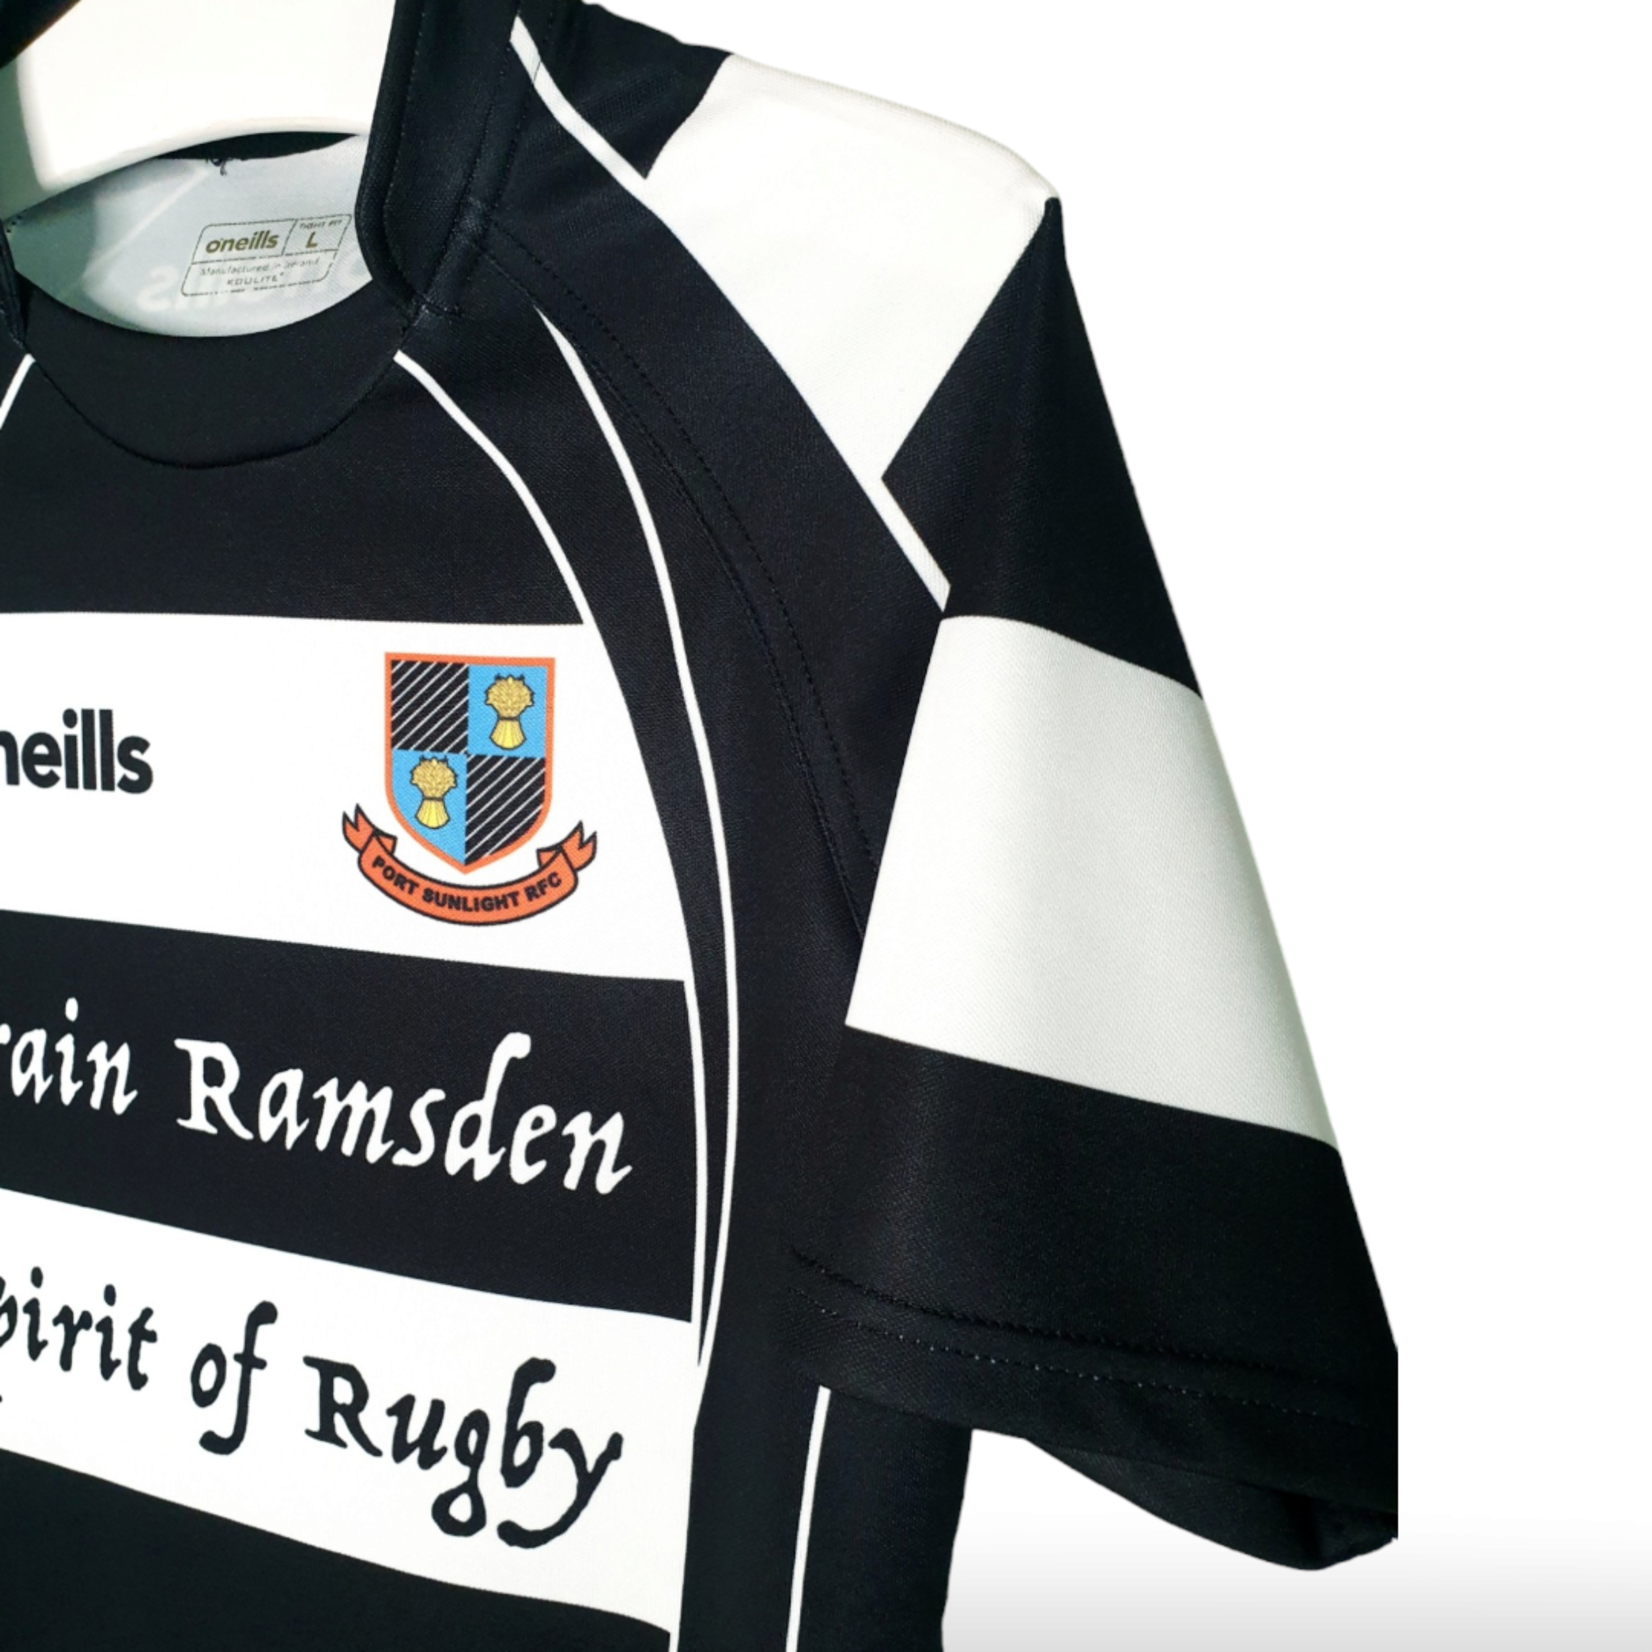 O'Neills Origineel O'Neills vintage rugby shirt Port Sunlight